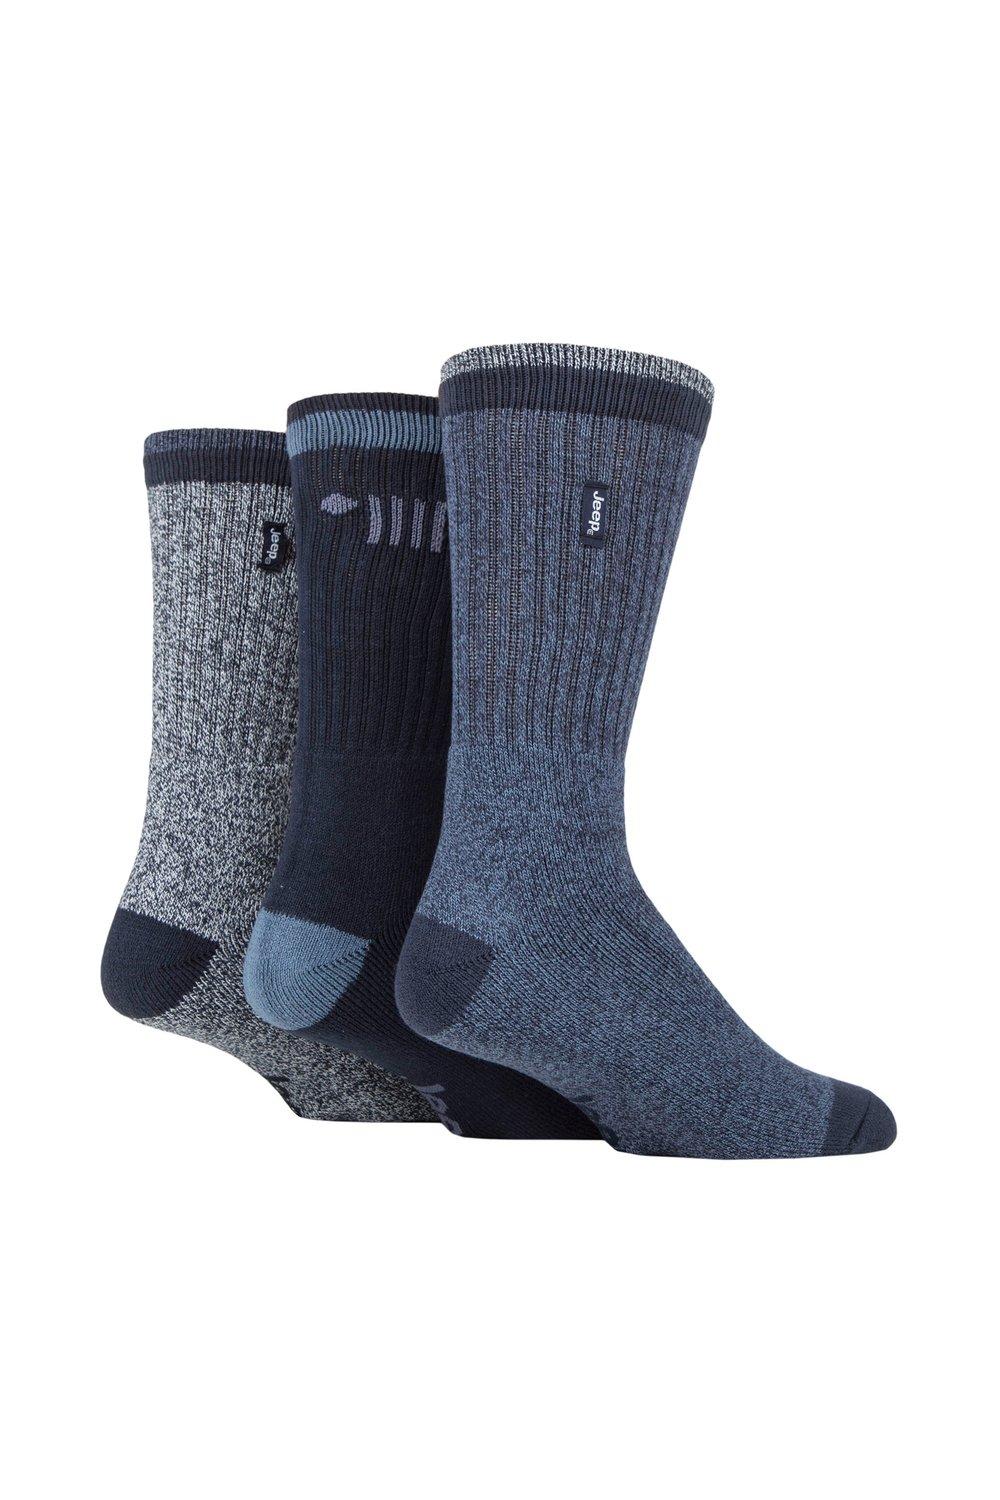 3 Pair Terrain Leisure Socks